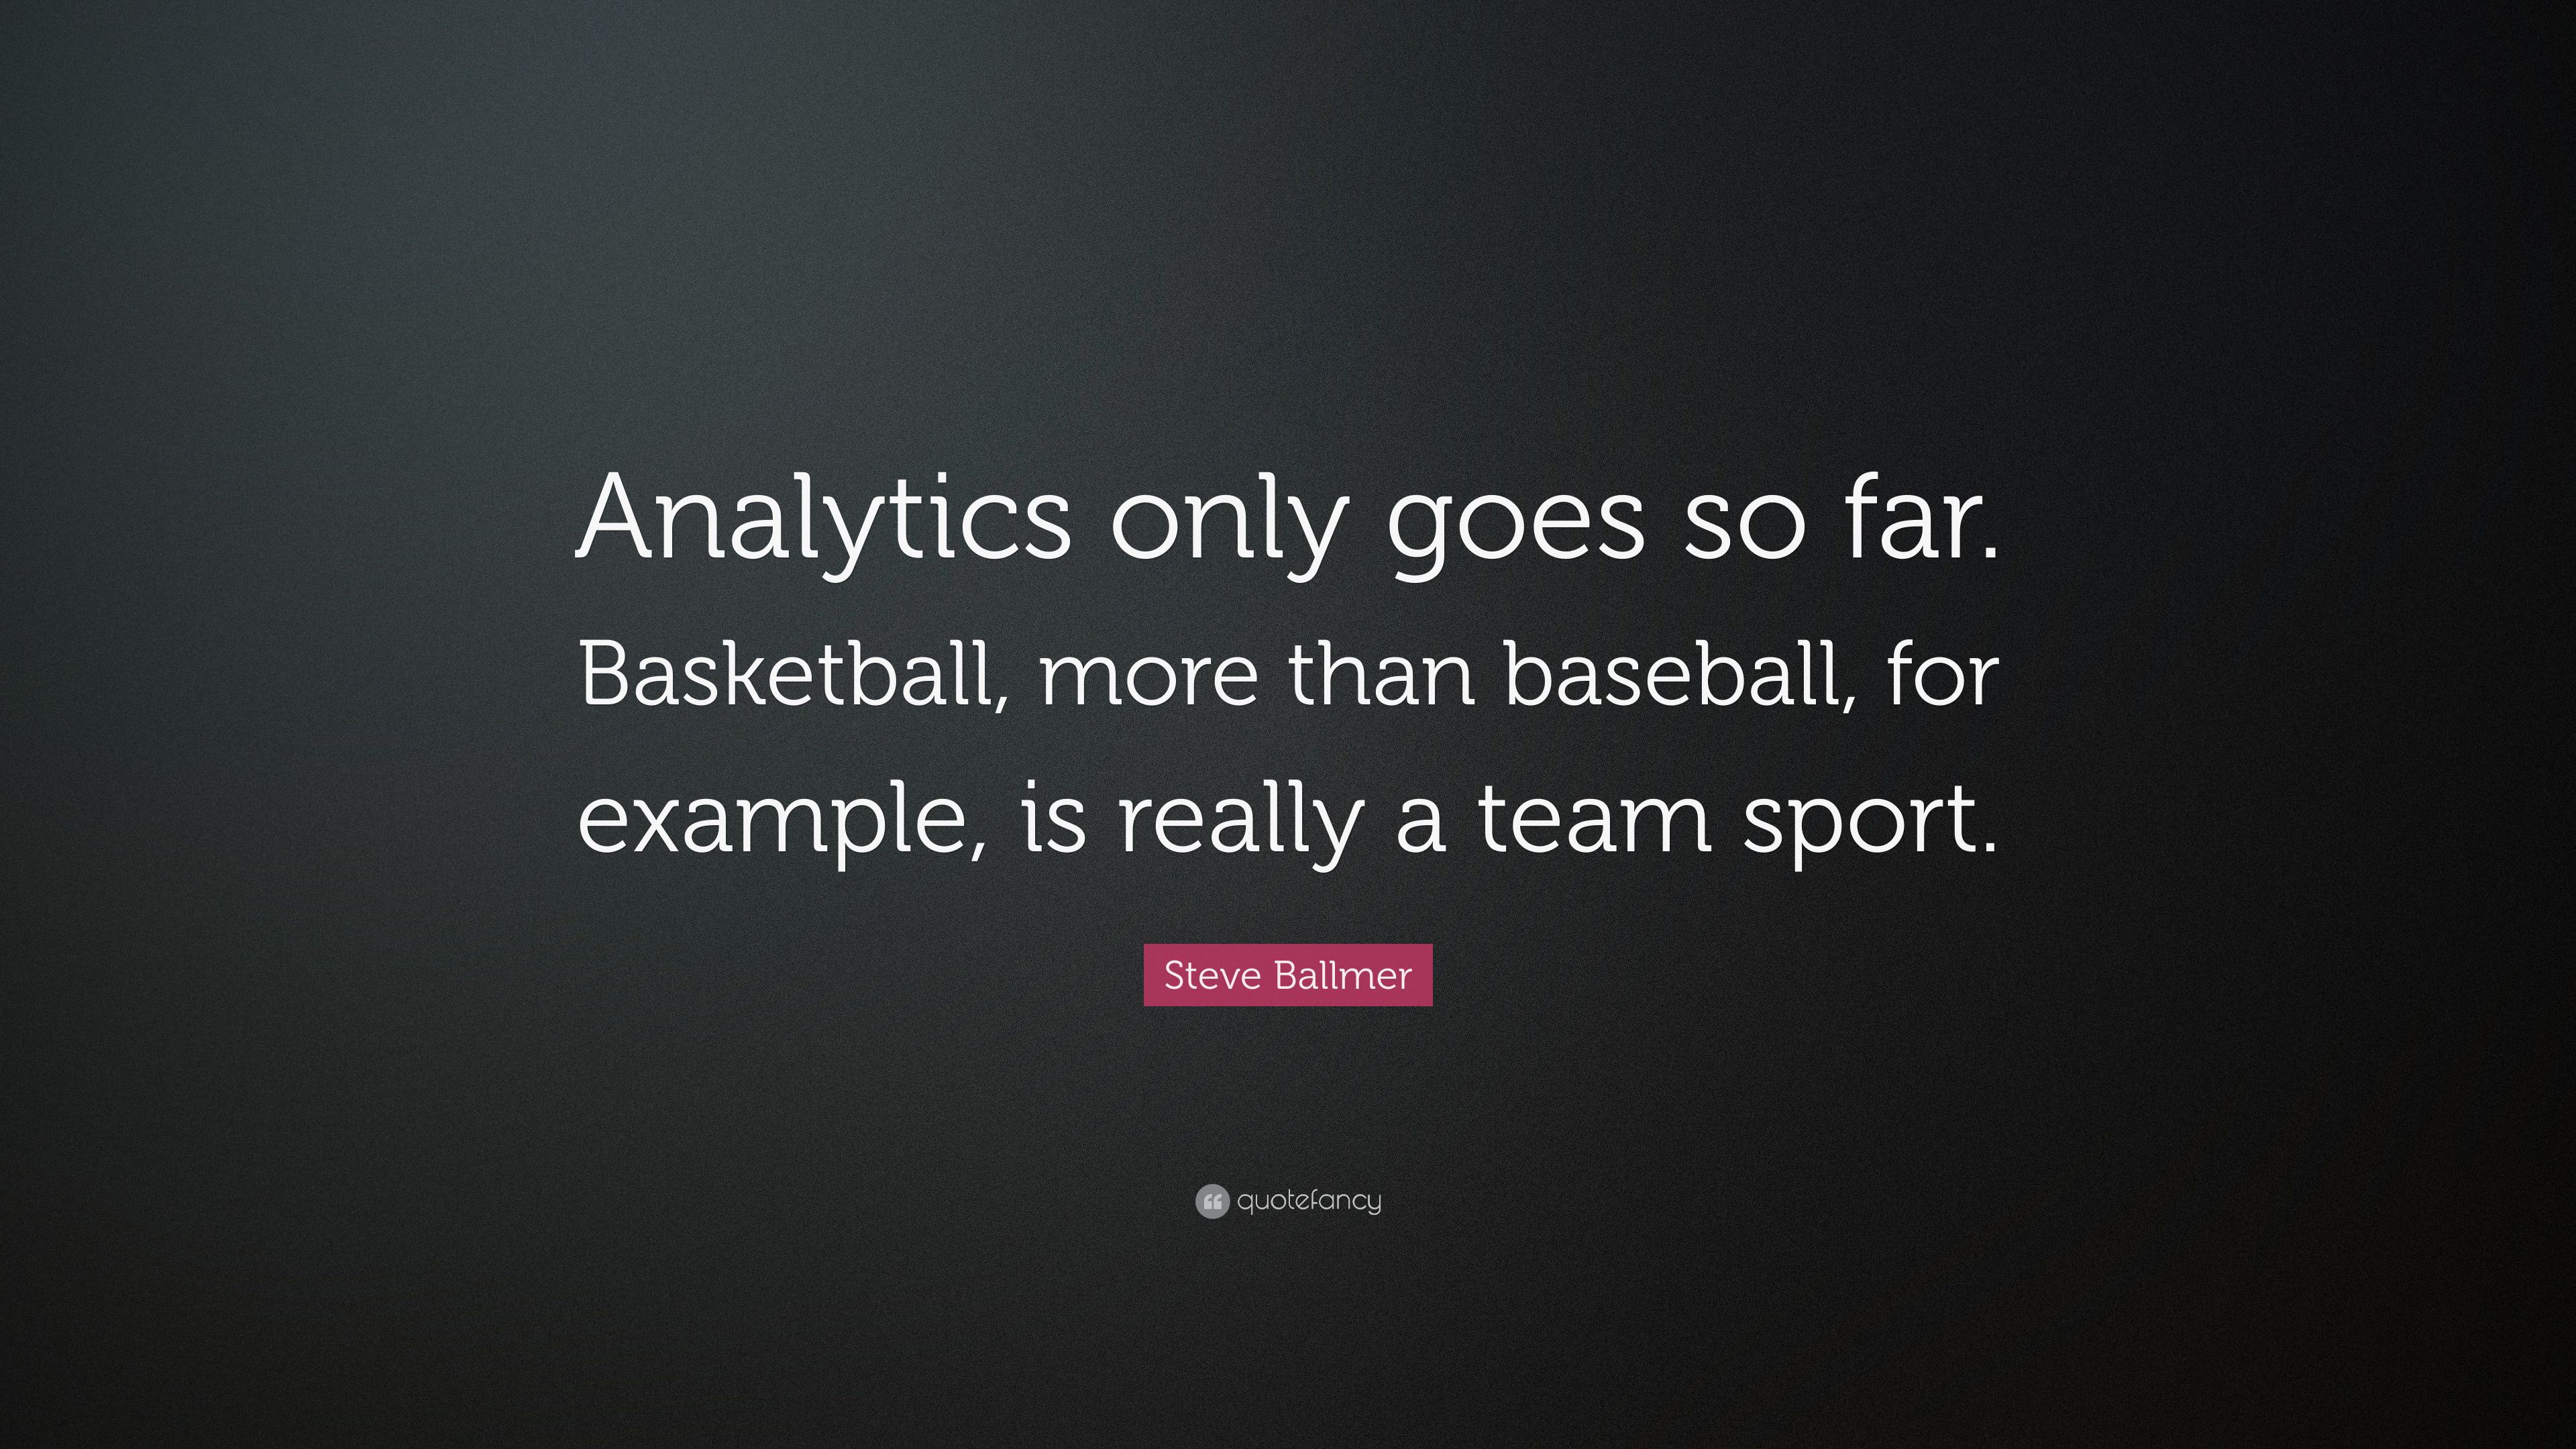 Steve Ballmer Quote: “Analytics only goes so far. Basketball, more